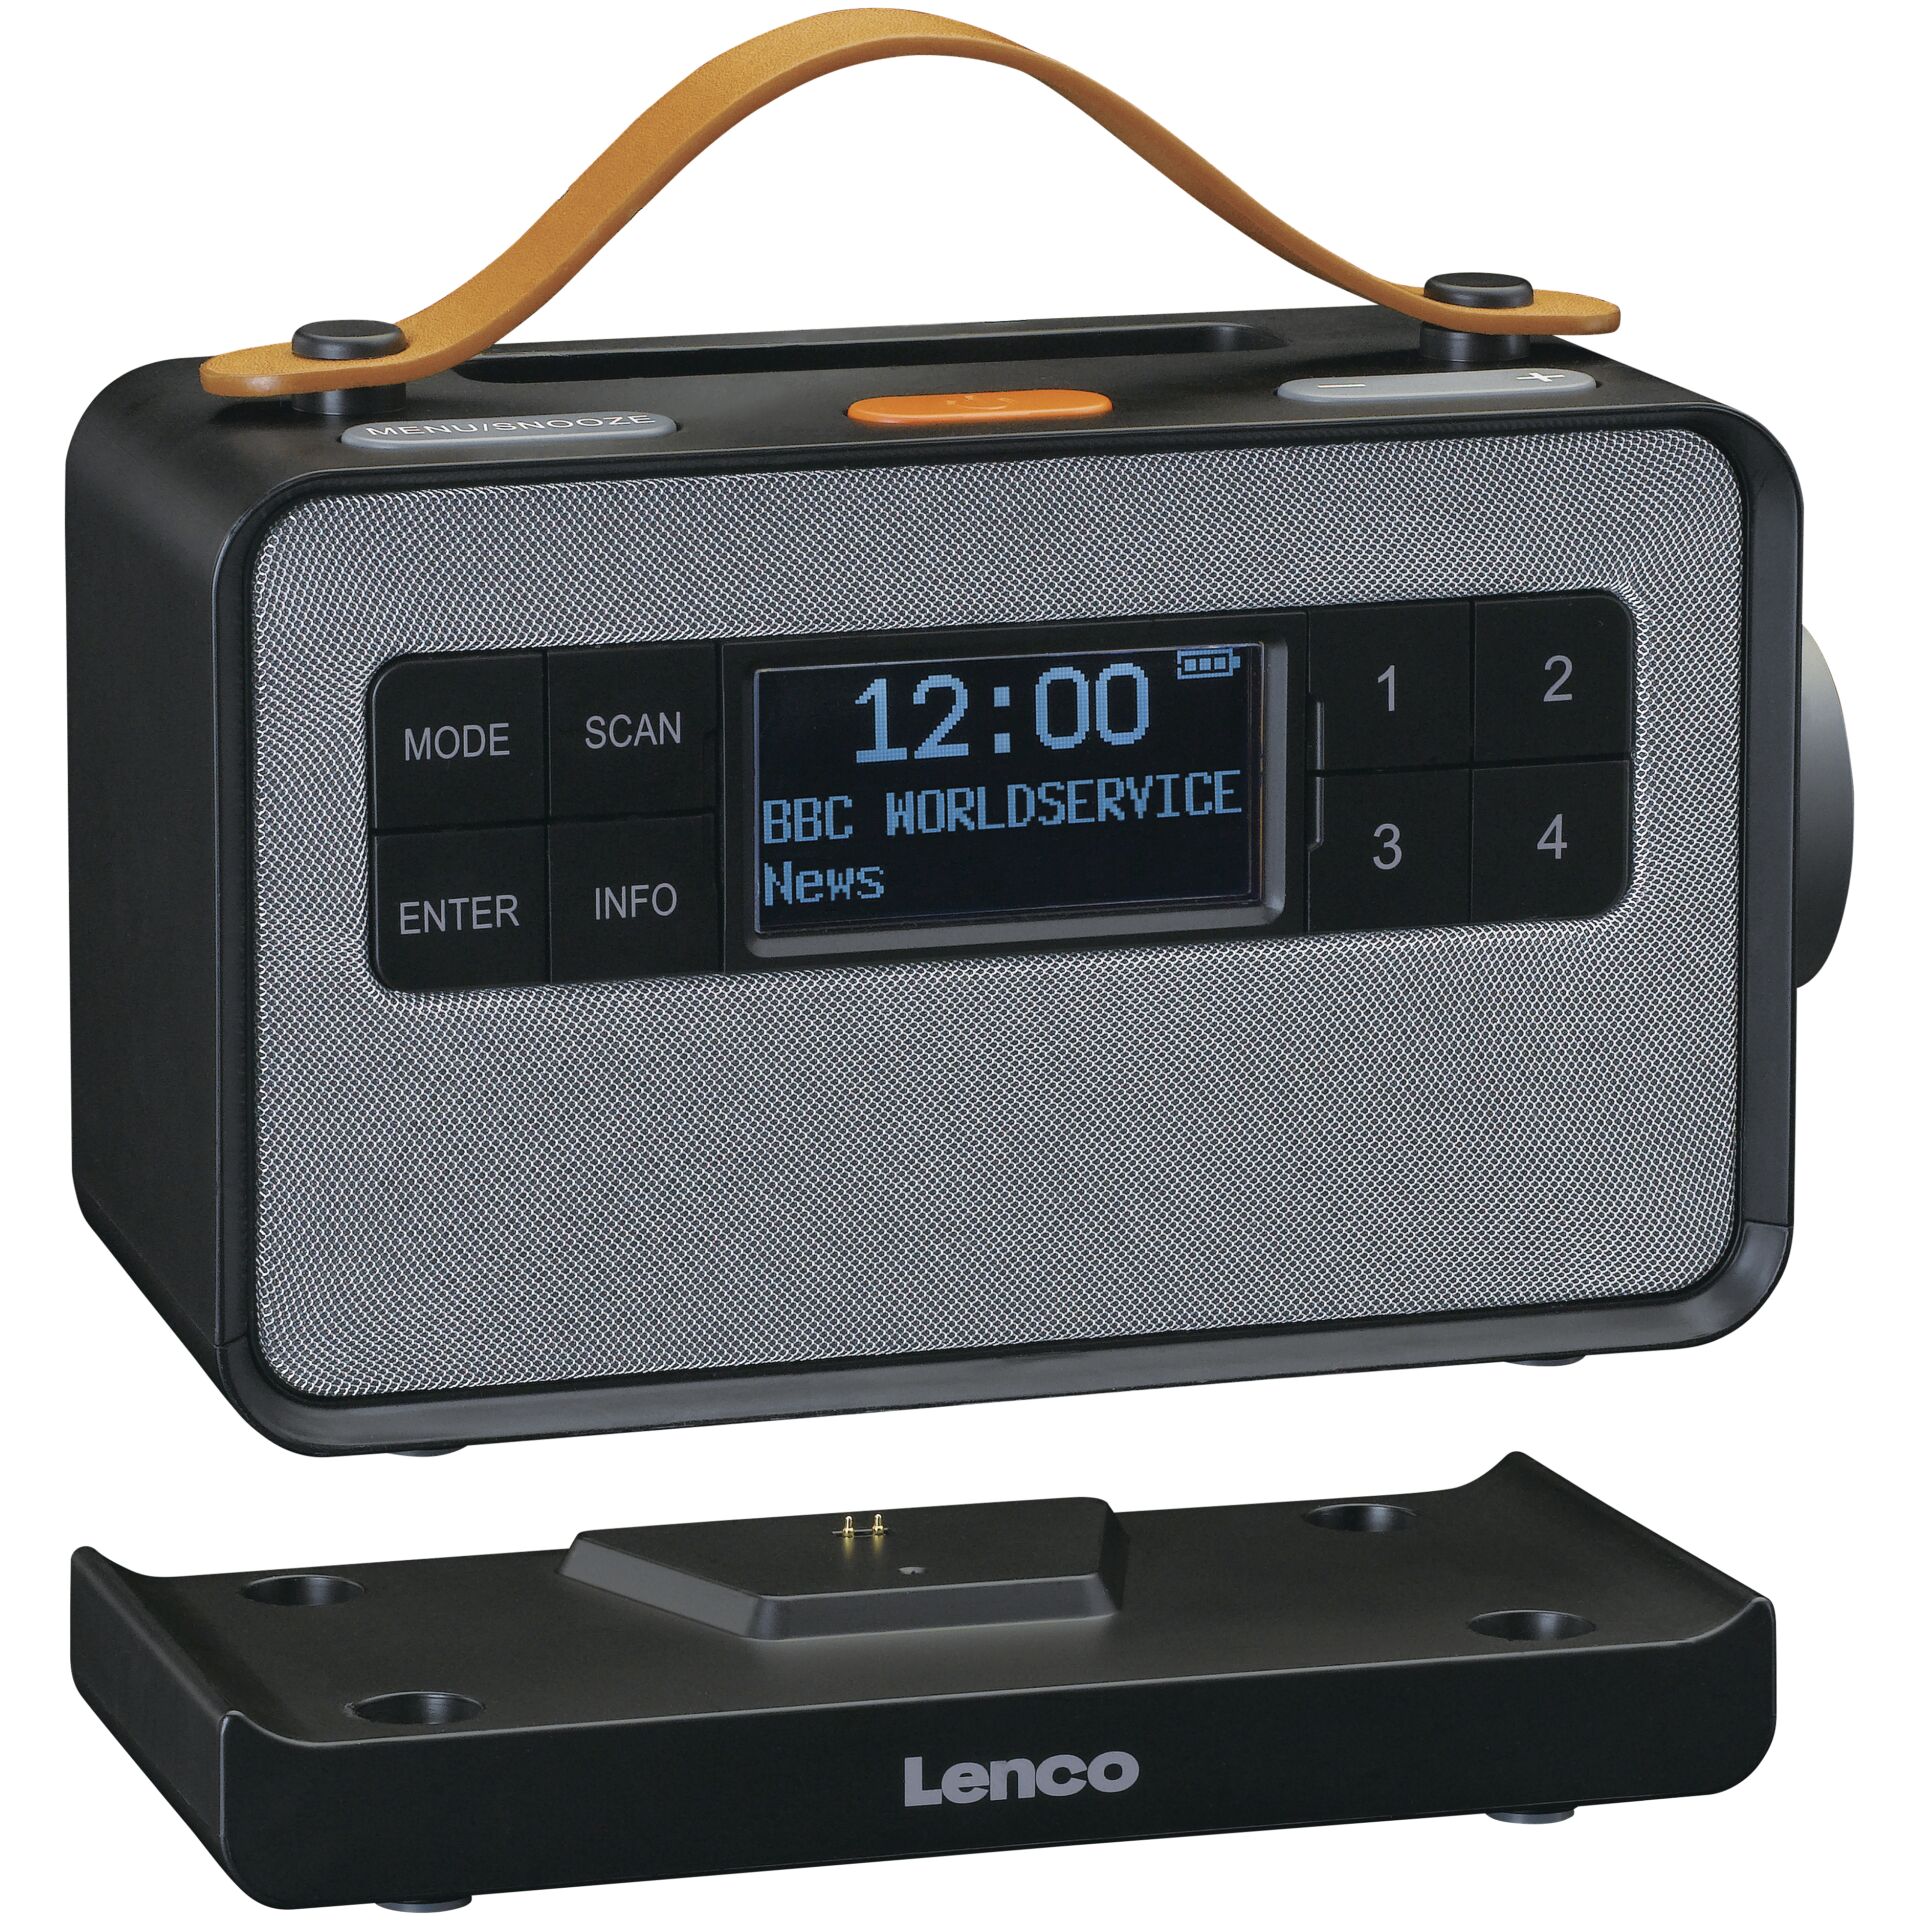 schwarz -Lenco Hardware/Electronic Lenco -PDR-065 (PDR-065BK)